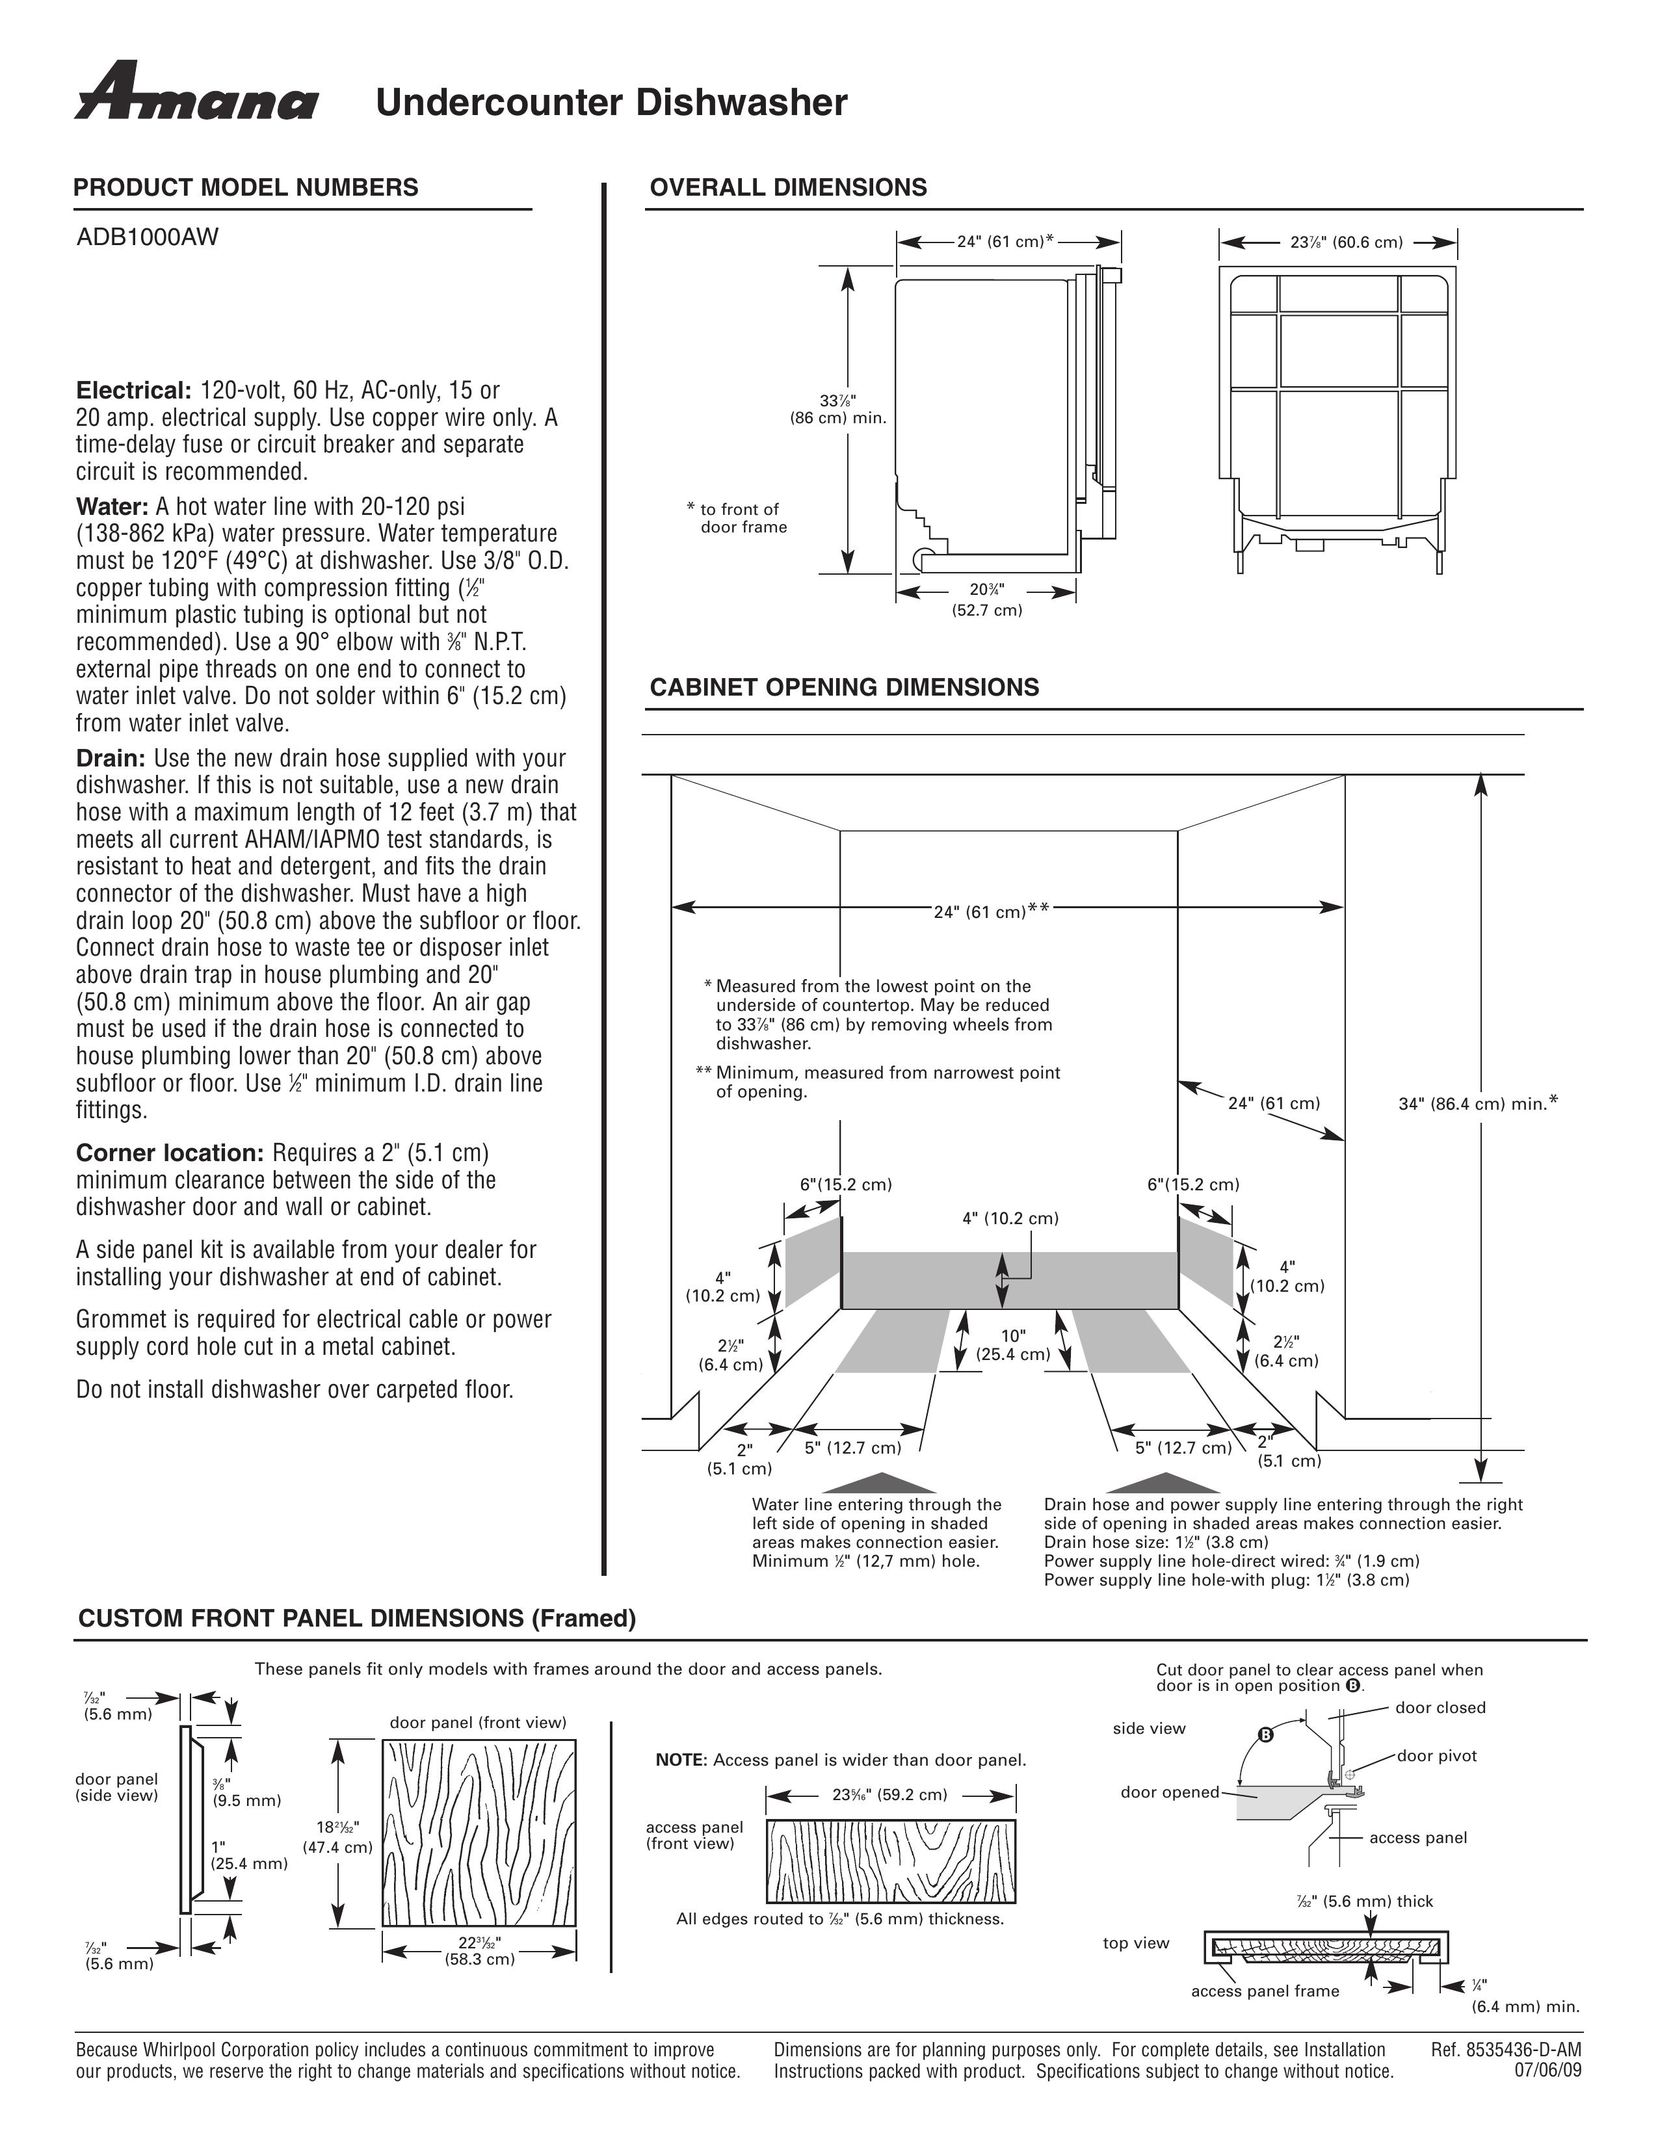 Amana ADB1000AW Dishwasher User Manual